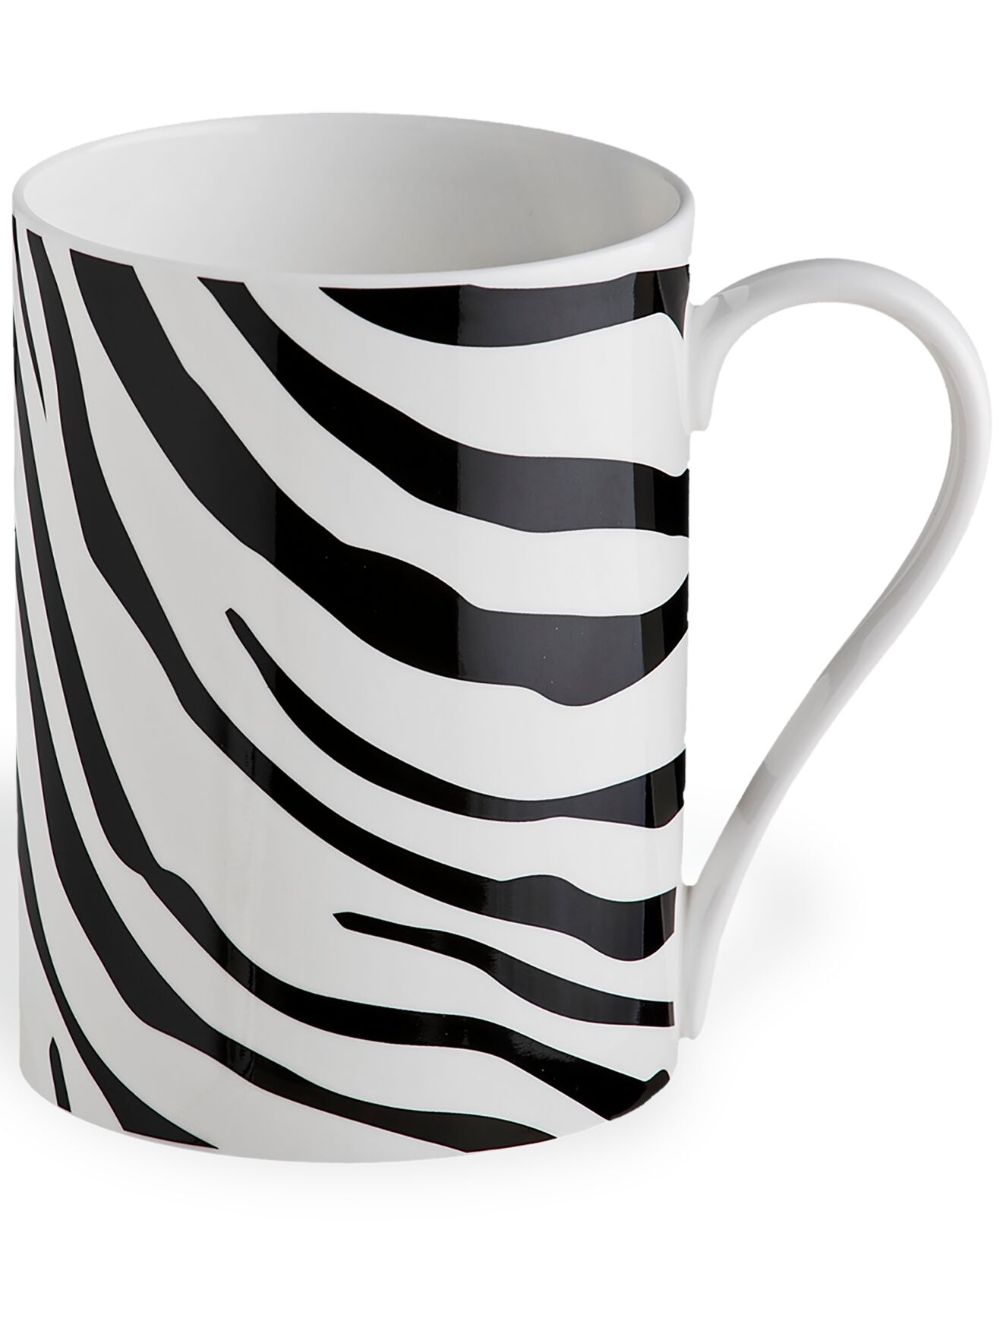 Roberto Cavalli Home Zebrage Porcelain Mug - Farfetch